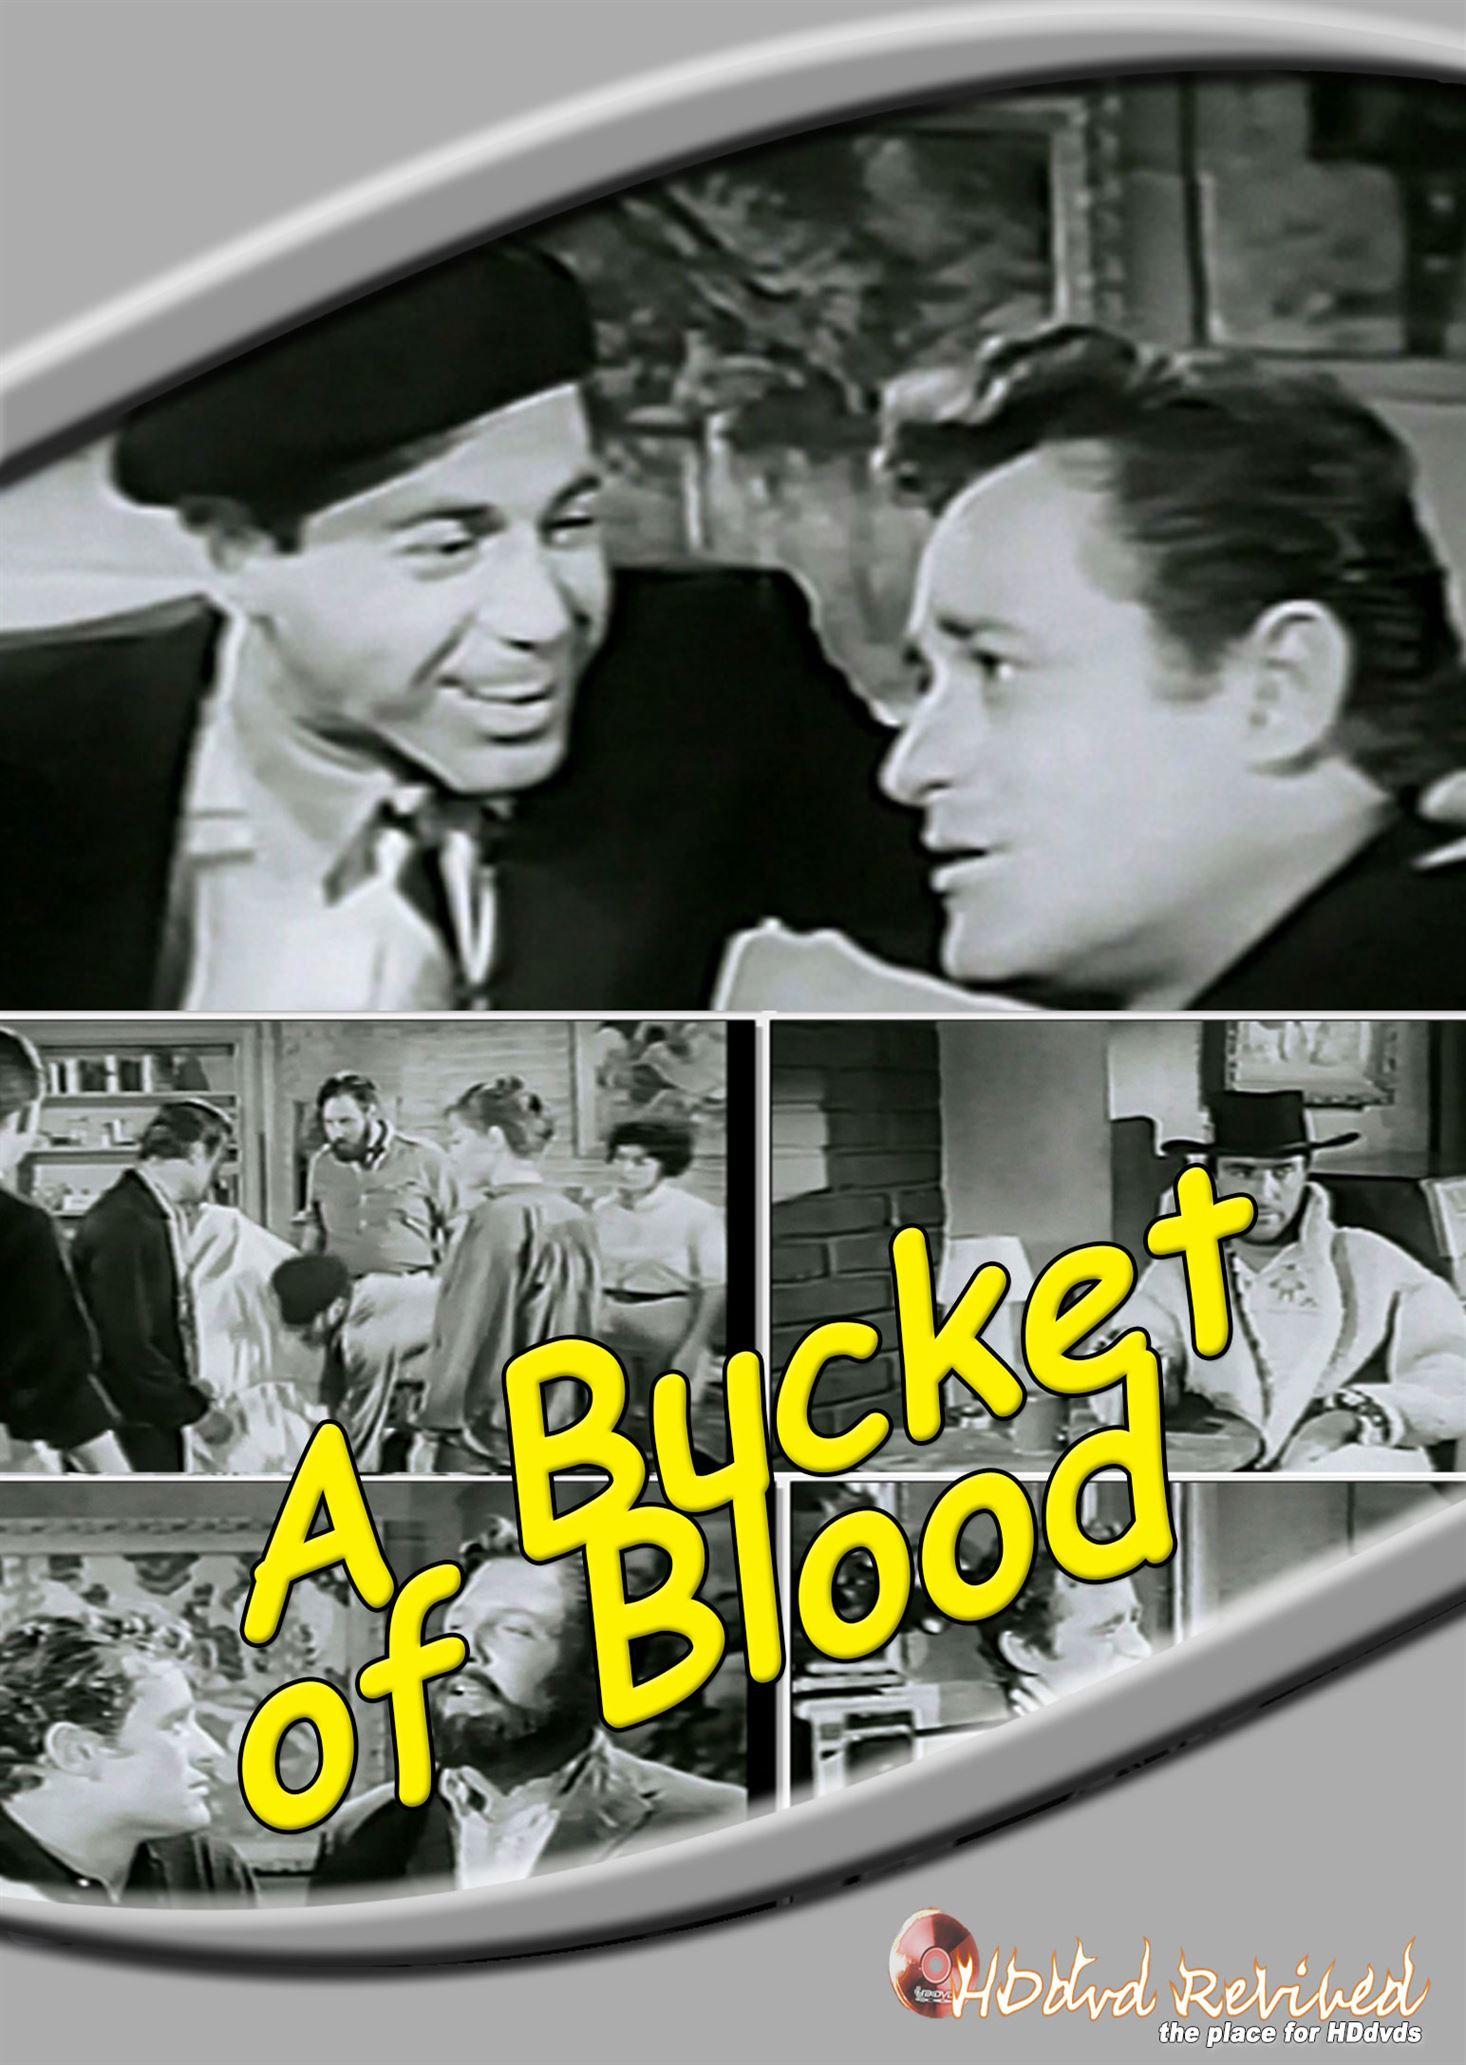 A Bucket of blood (1959) Standard DVD (HDDVD-Revived) UK Seller